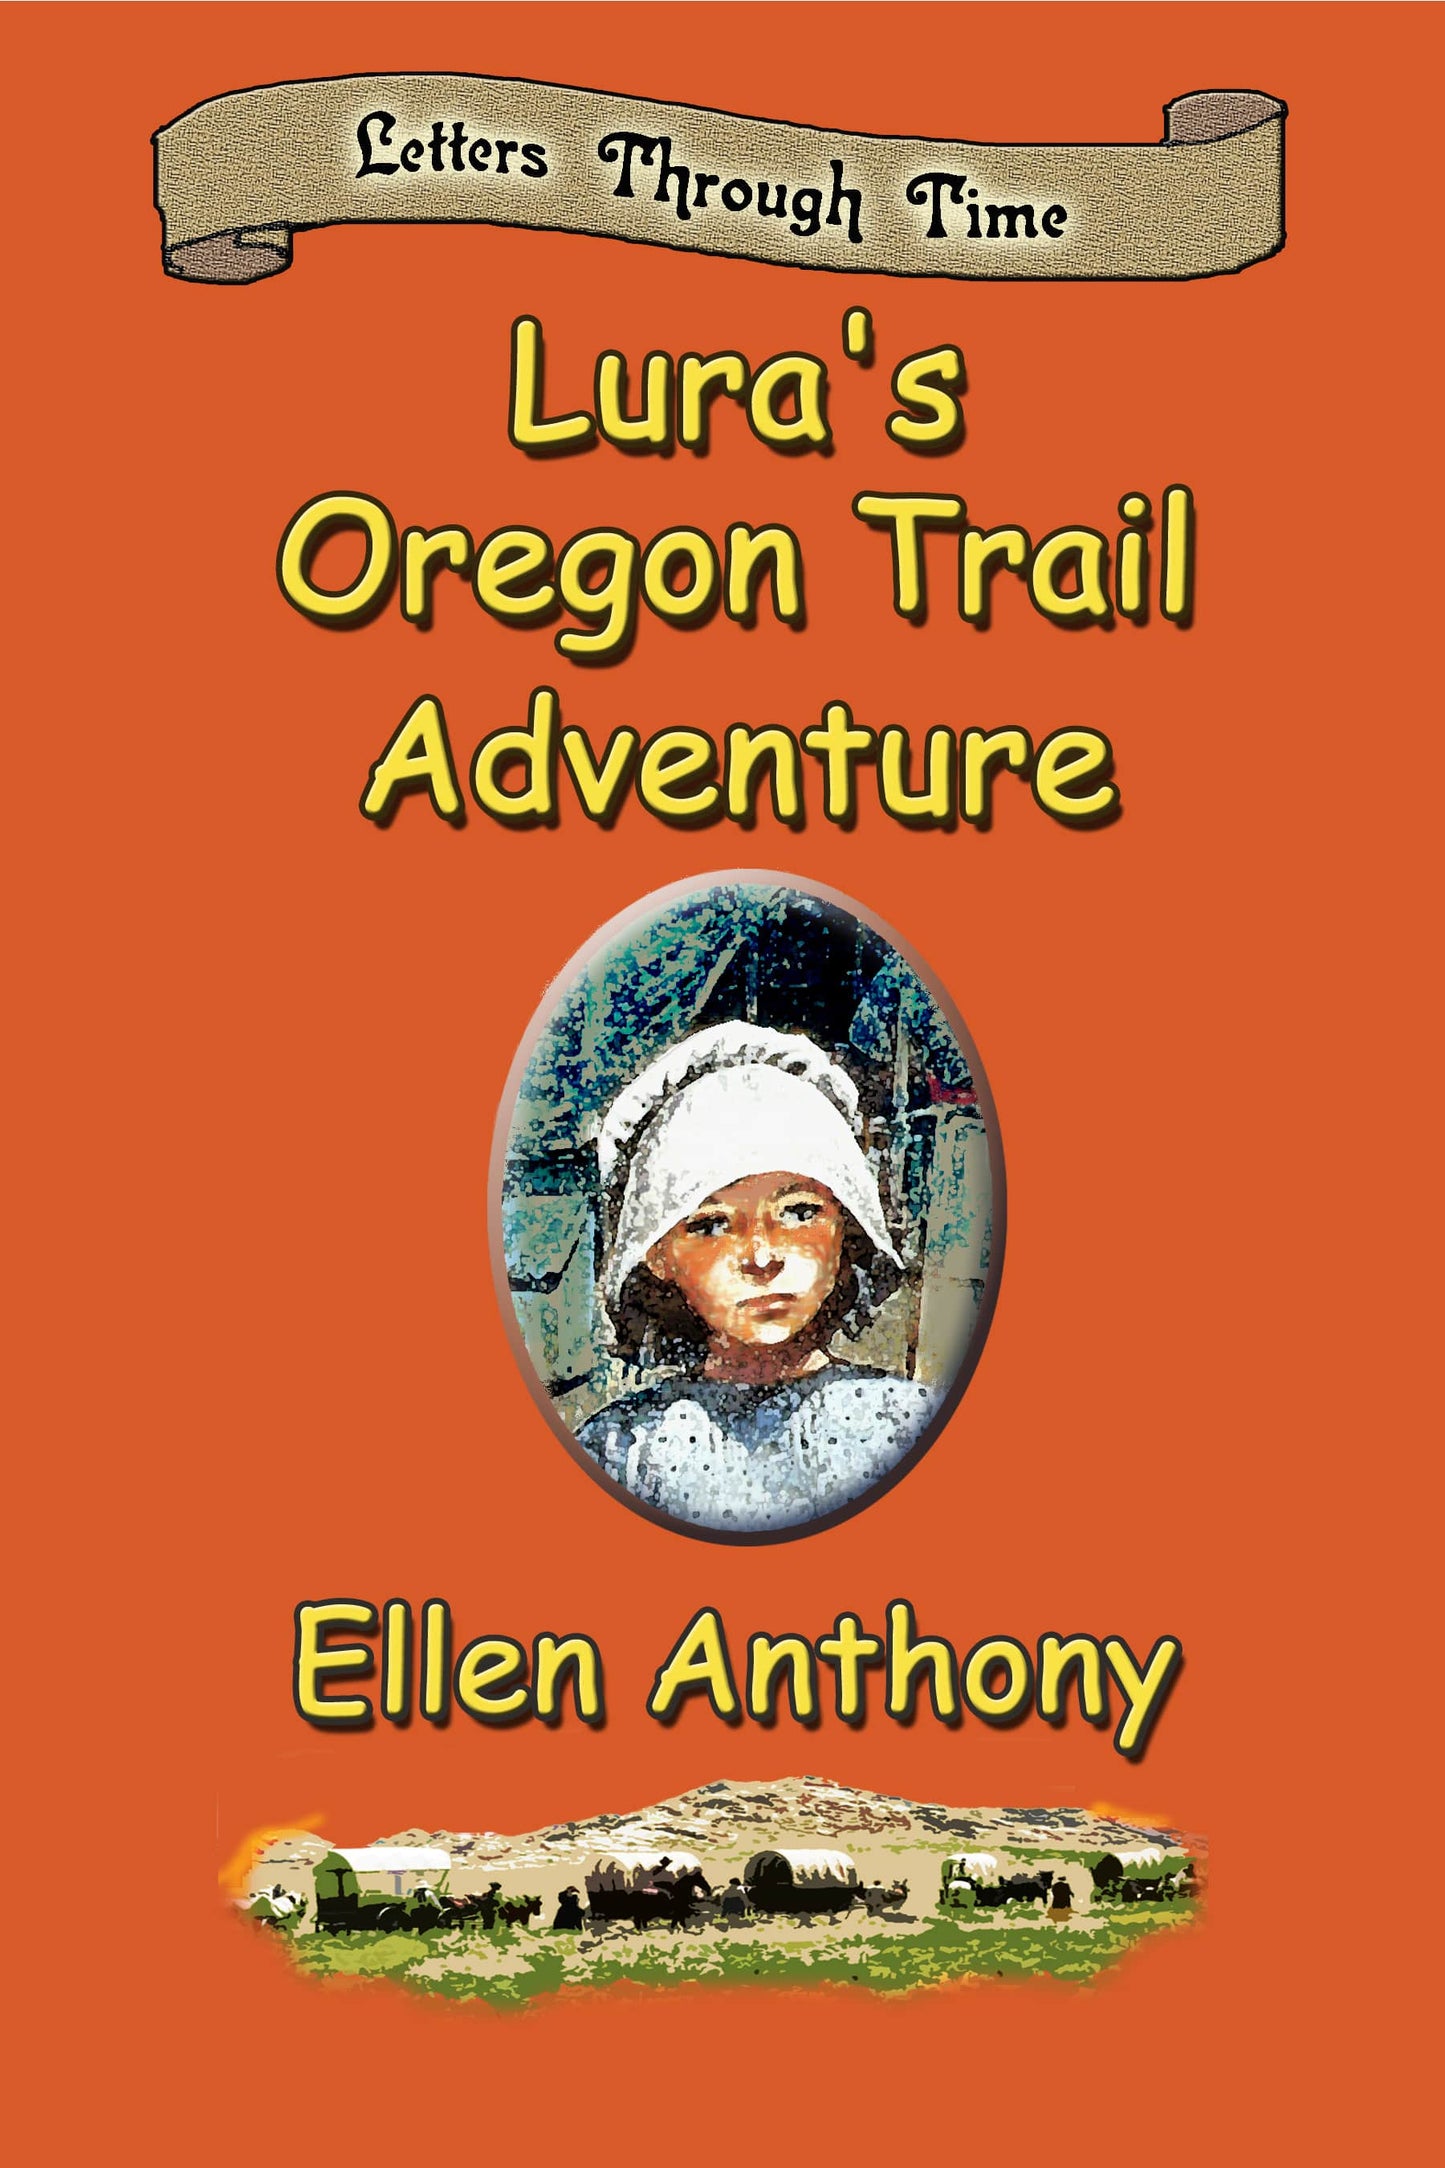 Lura's Oregon Trail Adventure (Letters Through Time)